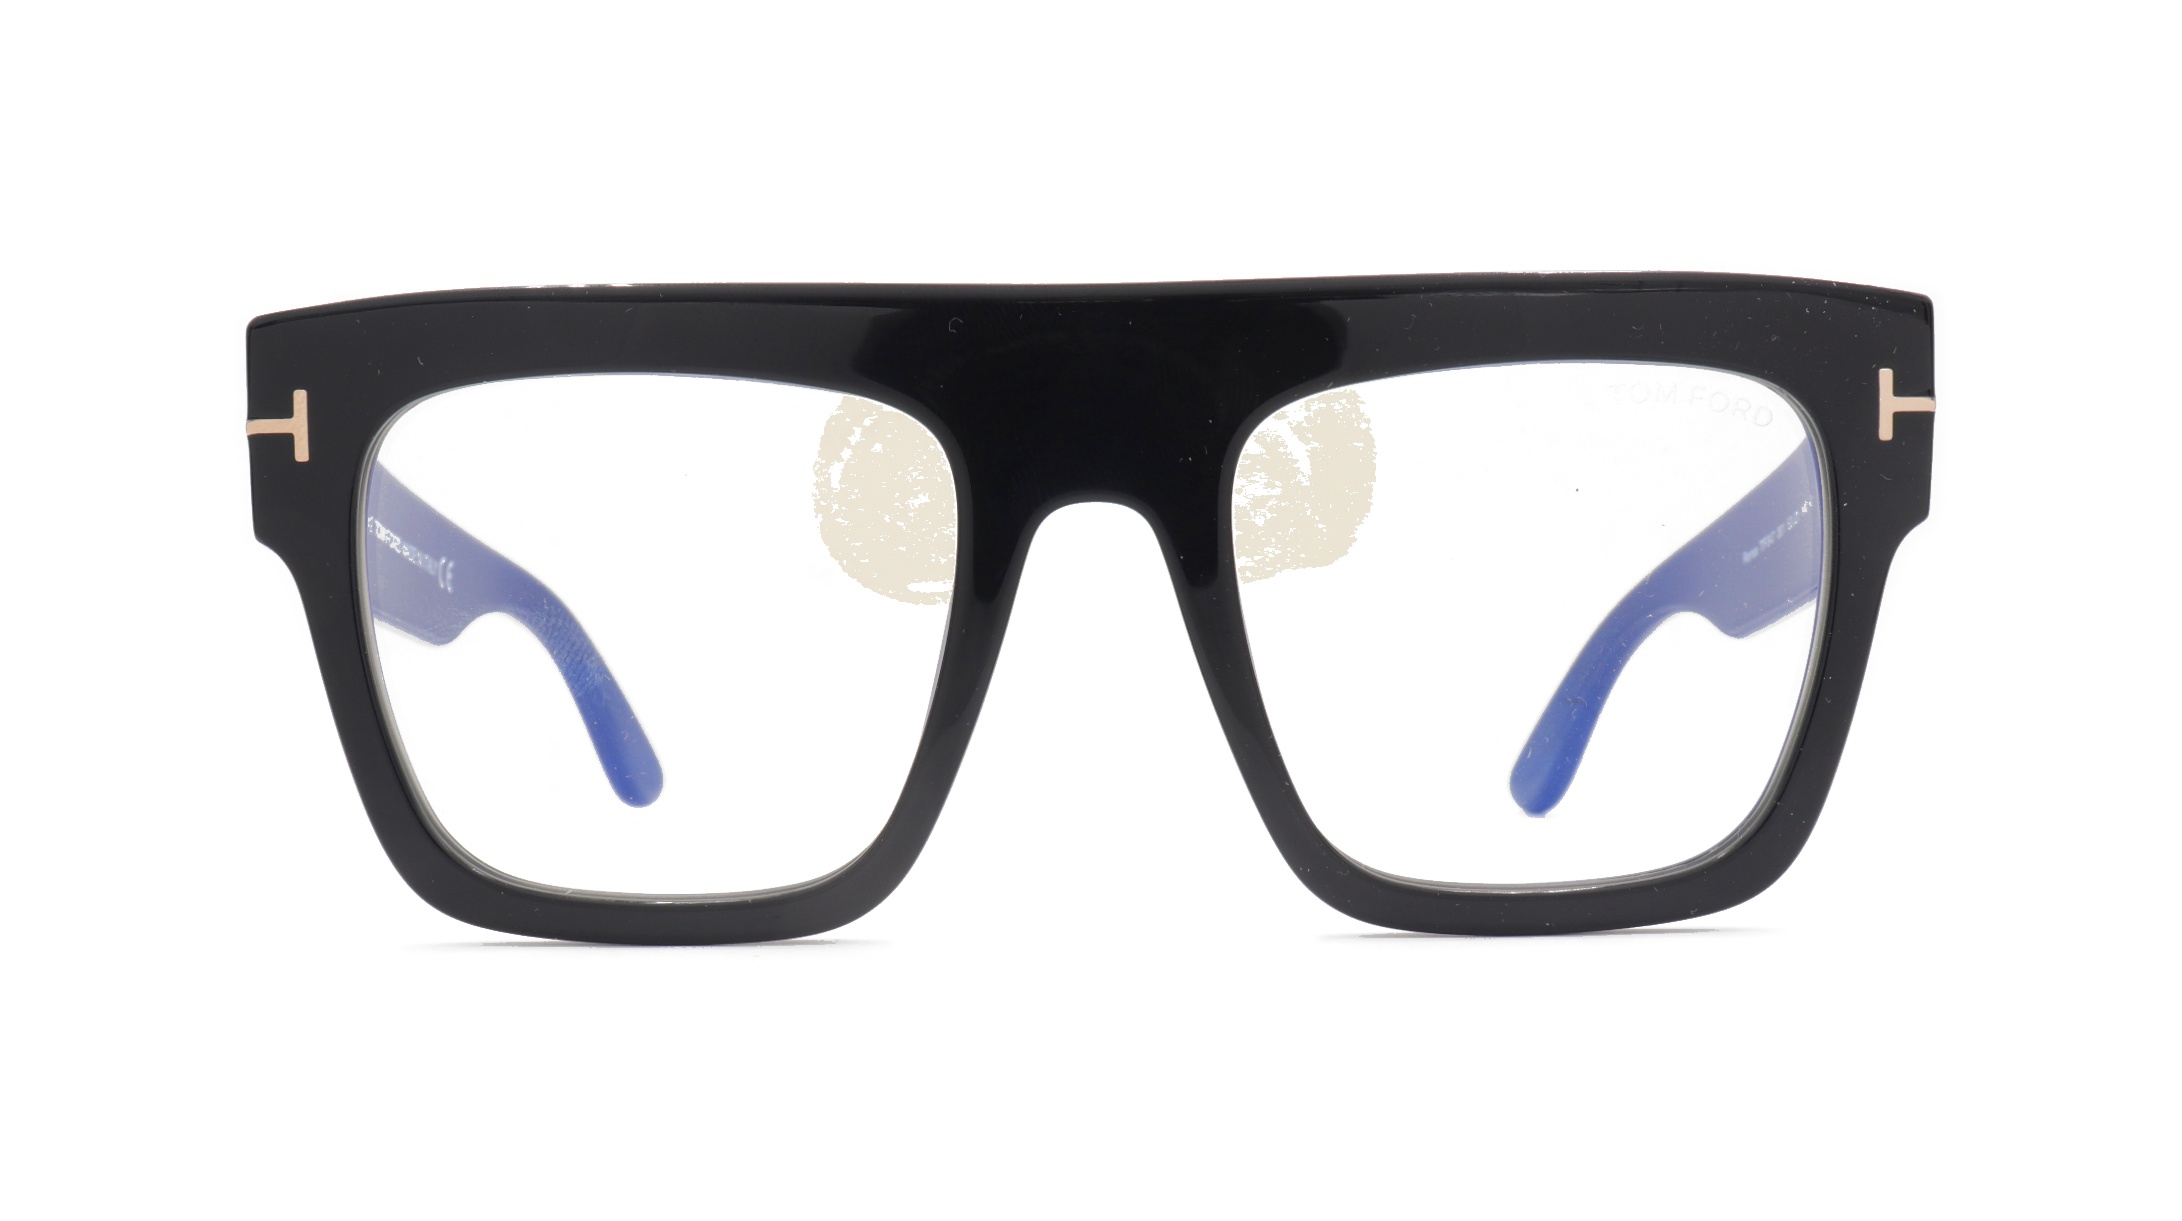 Glasses Tom-ford Tf847, black colour - Doyle